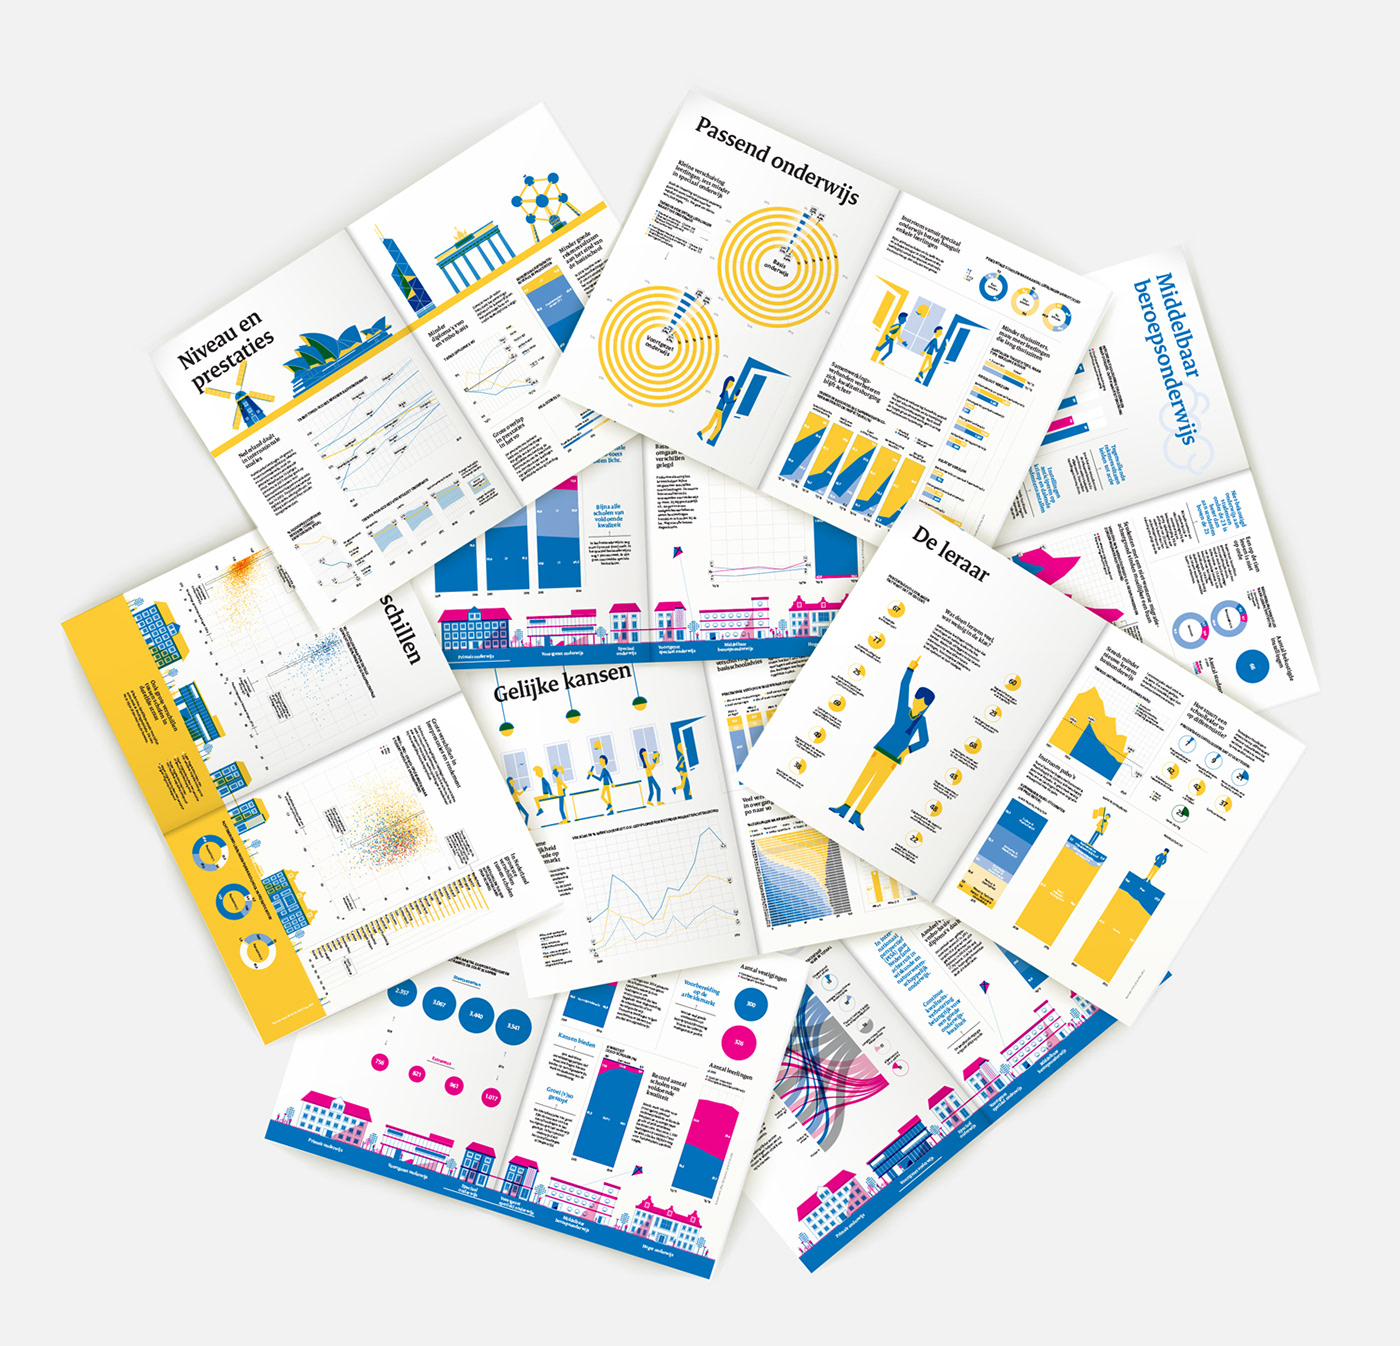 infographic information design ILLUSTRATION  data visualisation data visualization Data Story telling graphic design  Education storytelling  